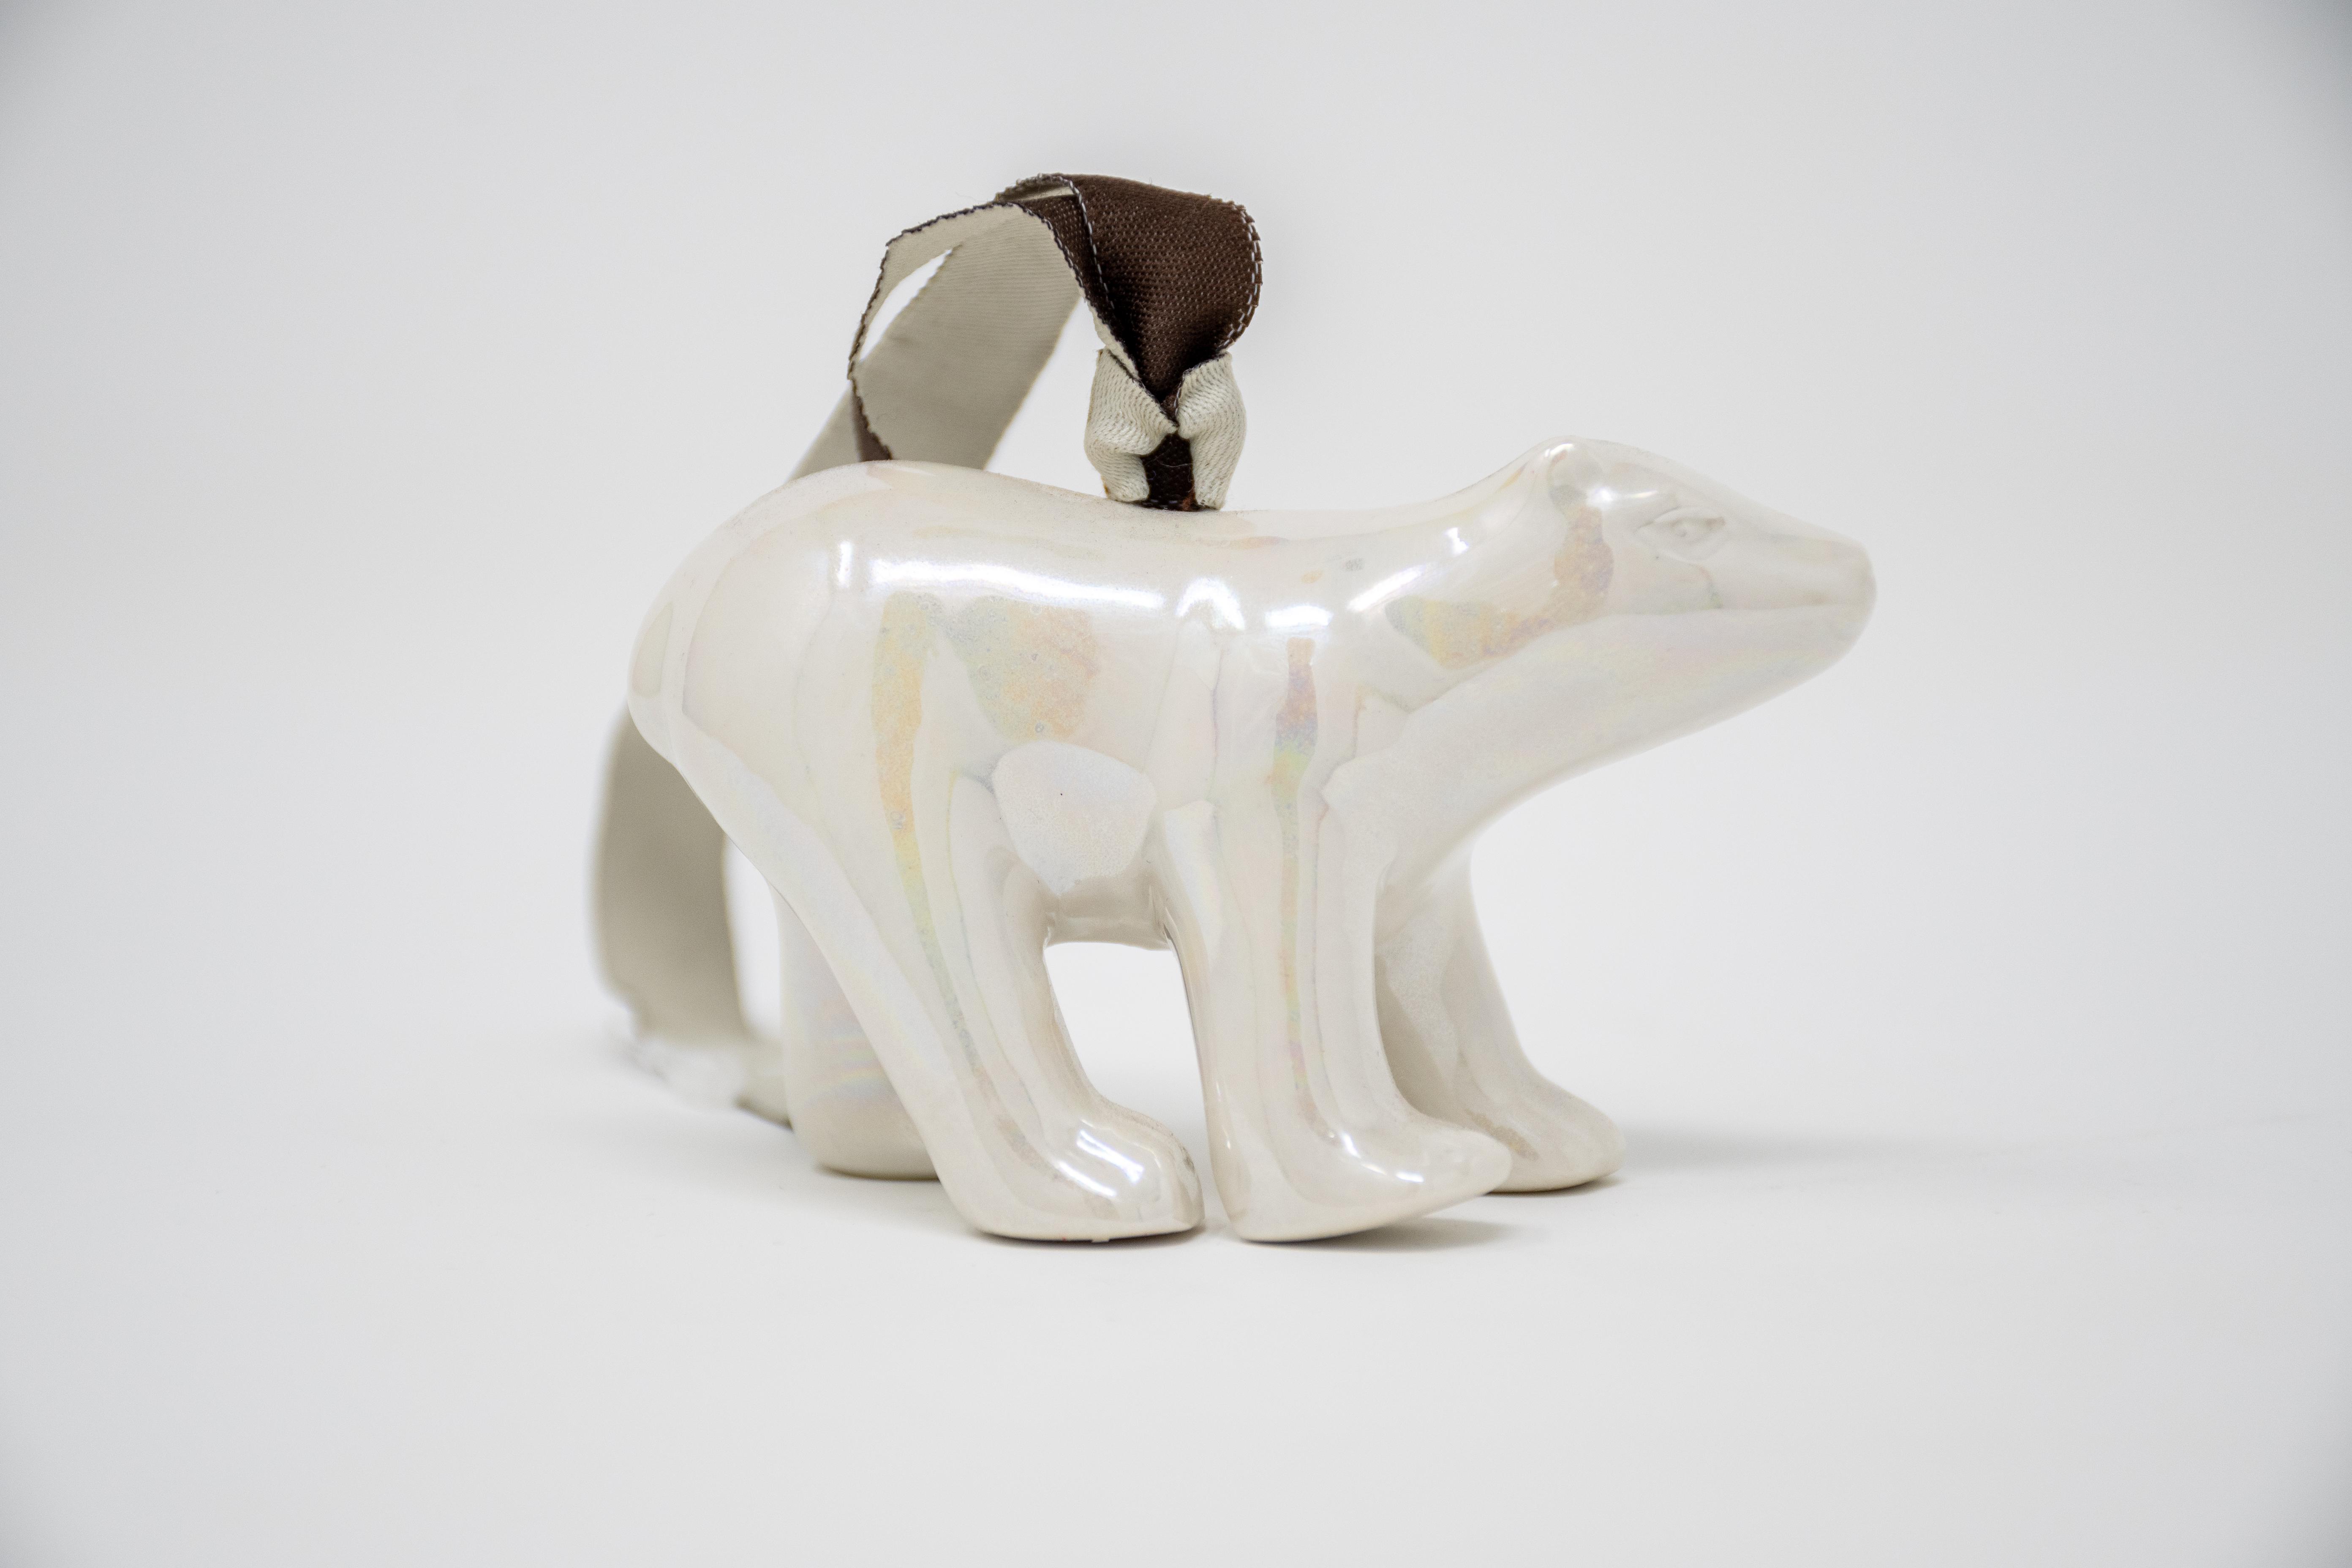  Porcelain Ornament - Polar Bear